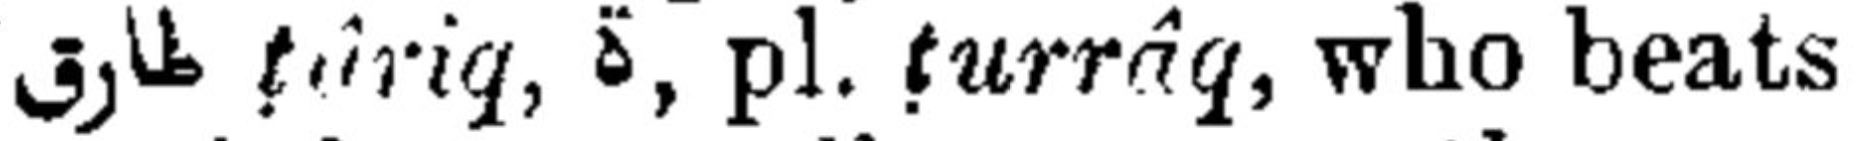 Steingass, page 622 (of 1241) tarik